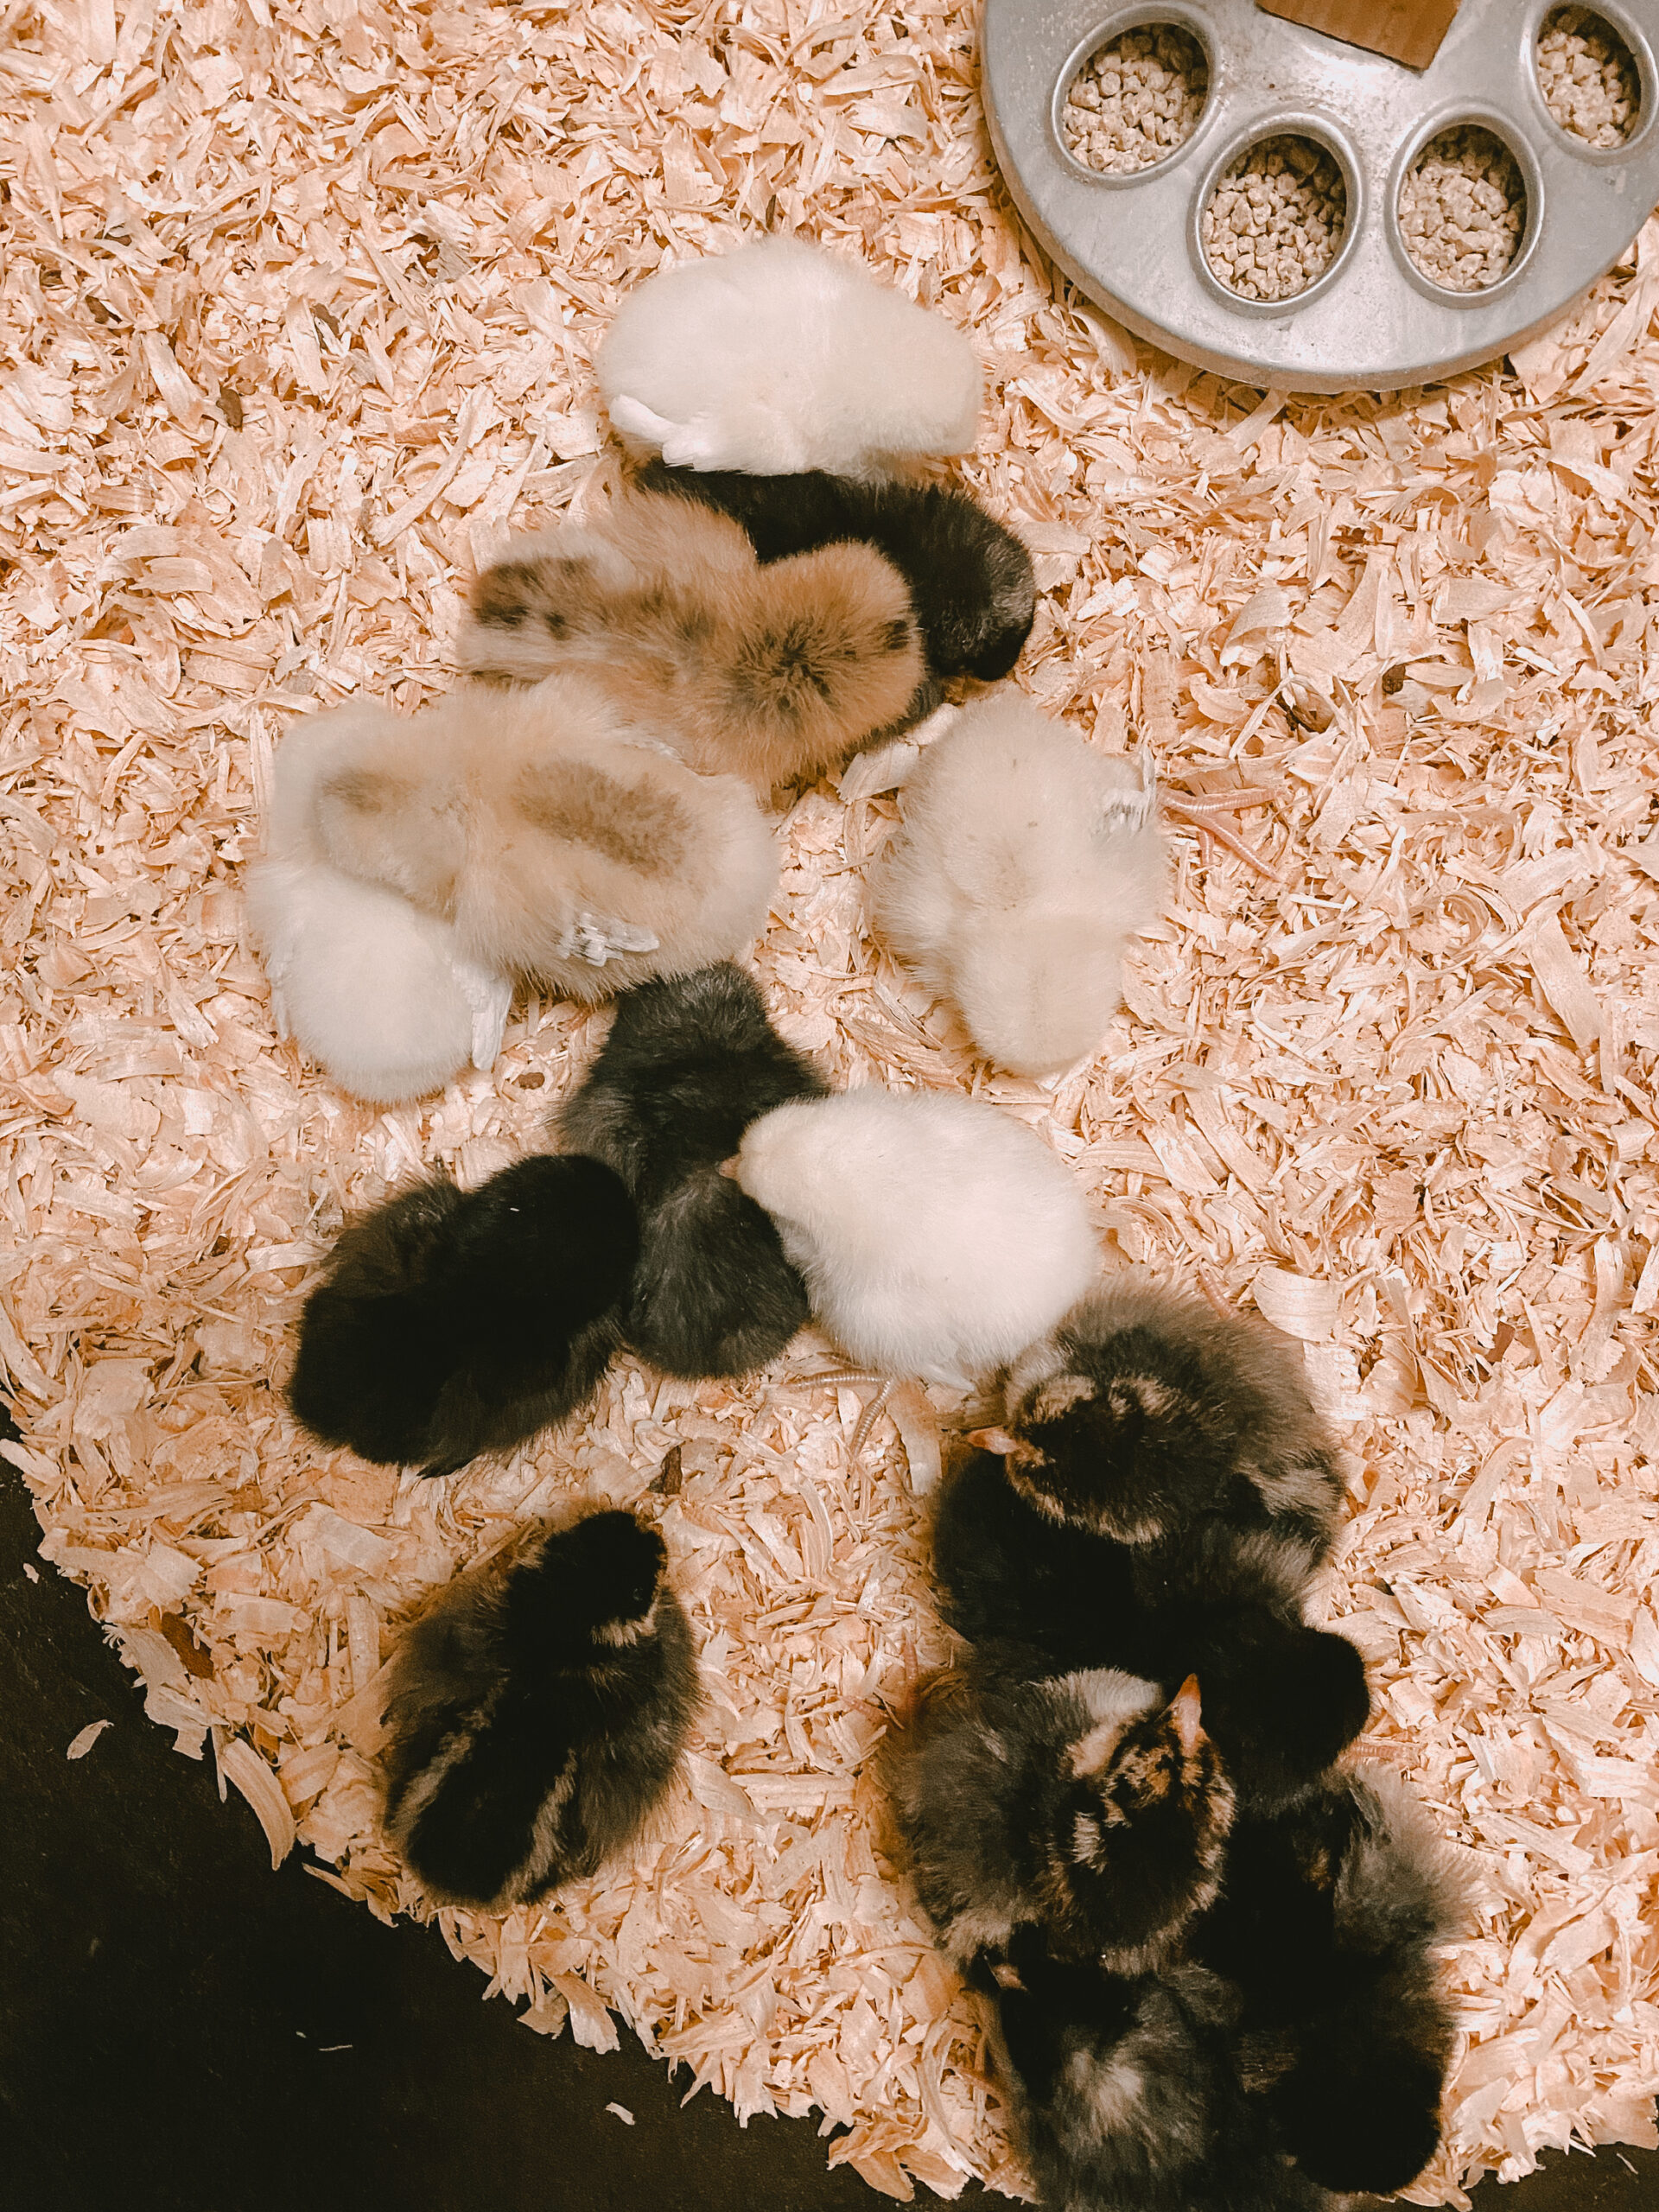 our tiny baby chicks, just a few days old! #backyardchickens #chickenfarmer #babychicks